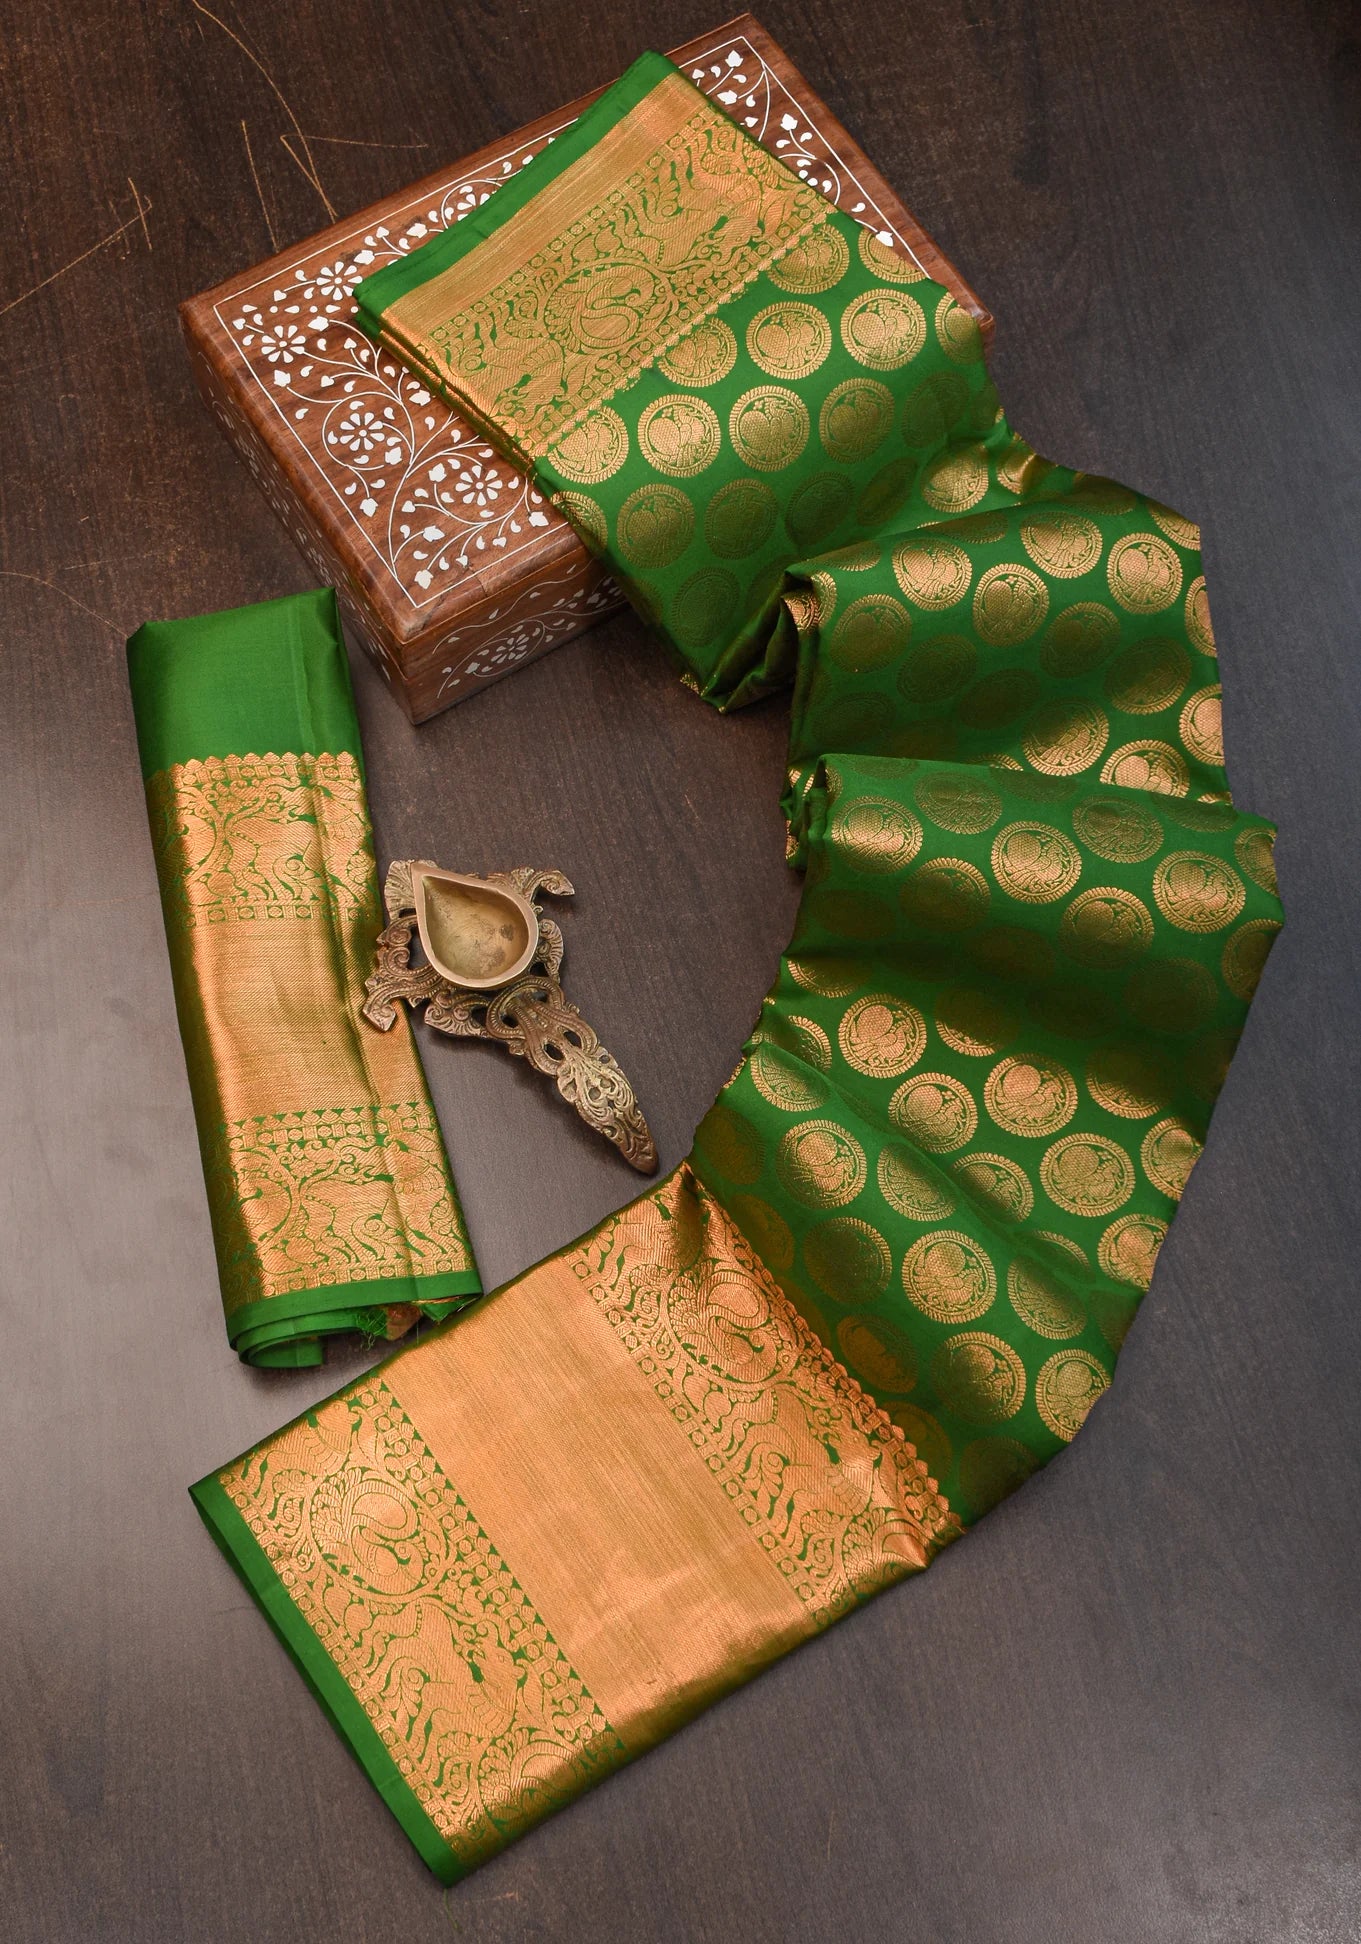 Preorder Exquisite Celebrity Grand Brocade Kanjivaram Pure Silk Saree in Leaf Green with Intricate Pallu and Zari | SILK MARK CERTIFIED